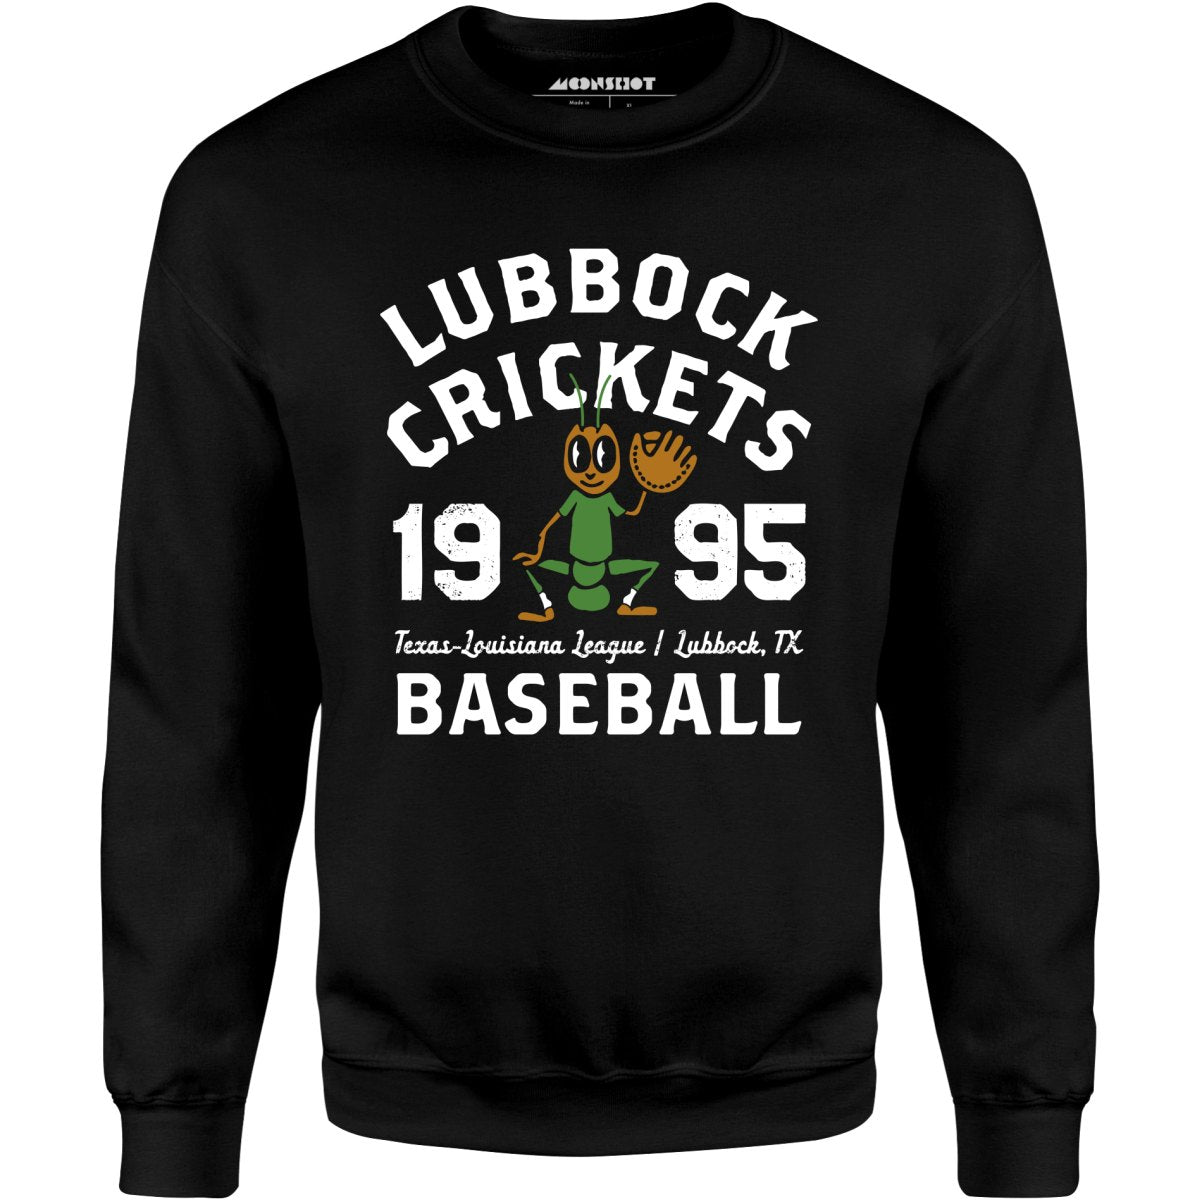 Lubbock Crickets - Texas - Vintage Defunct Baseball Teams - Unisex Sweatshirt